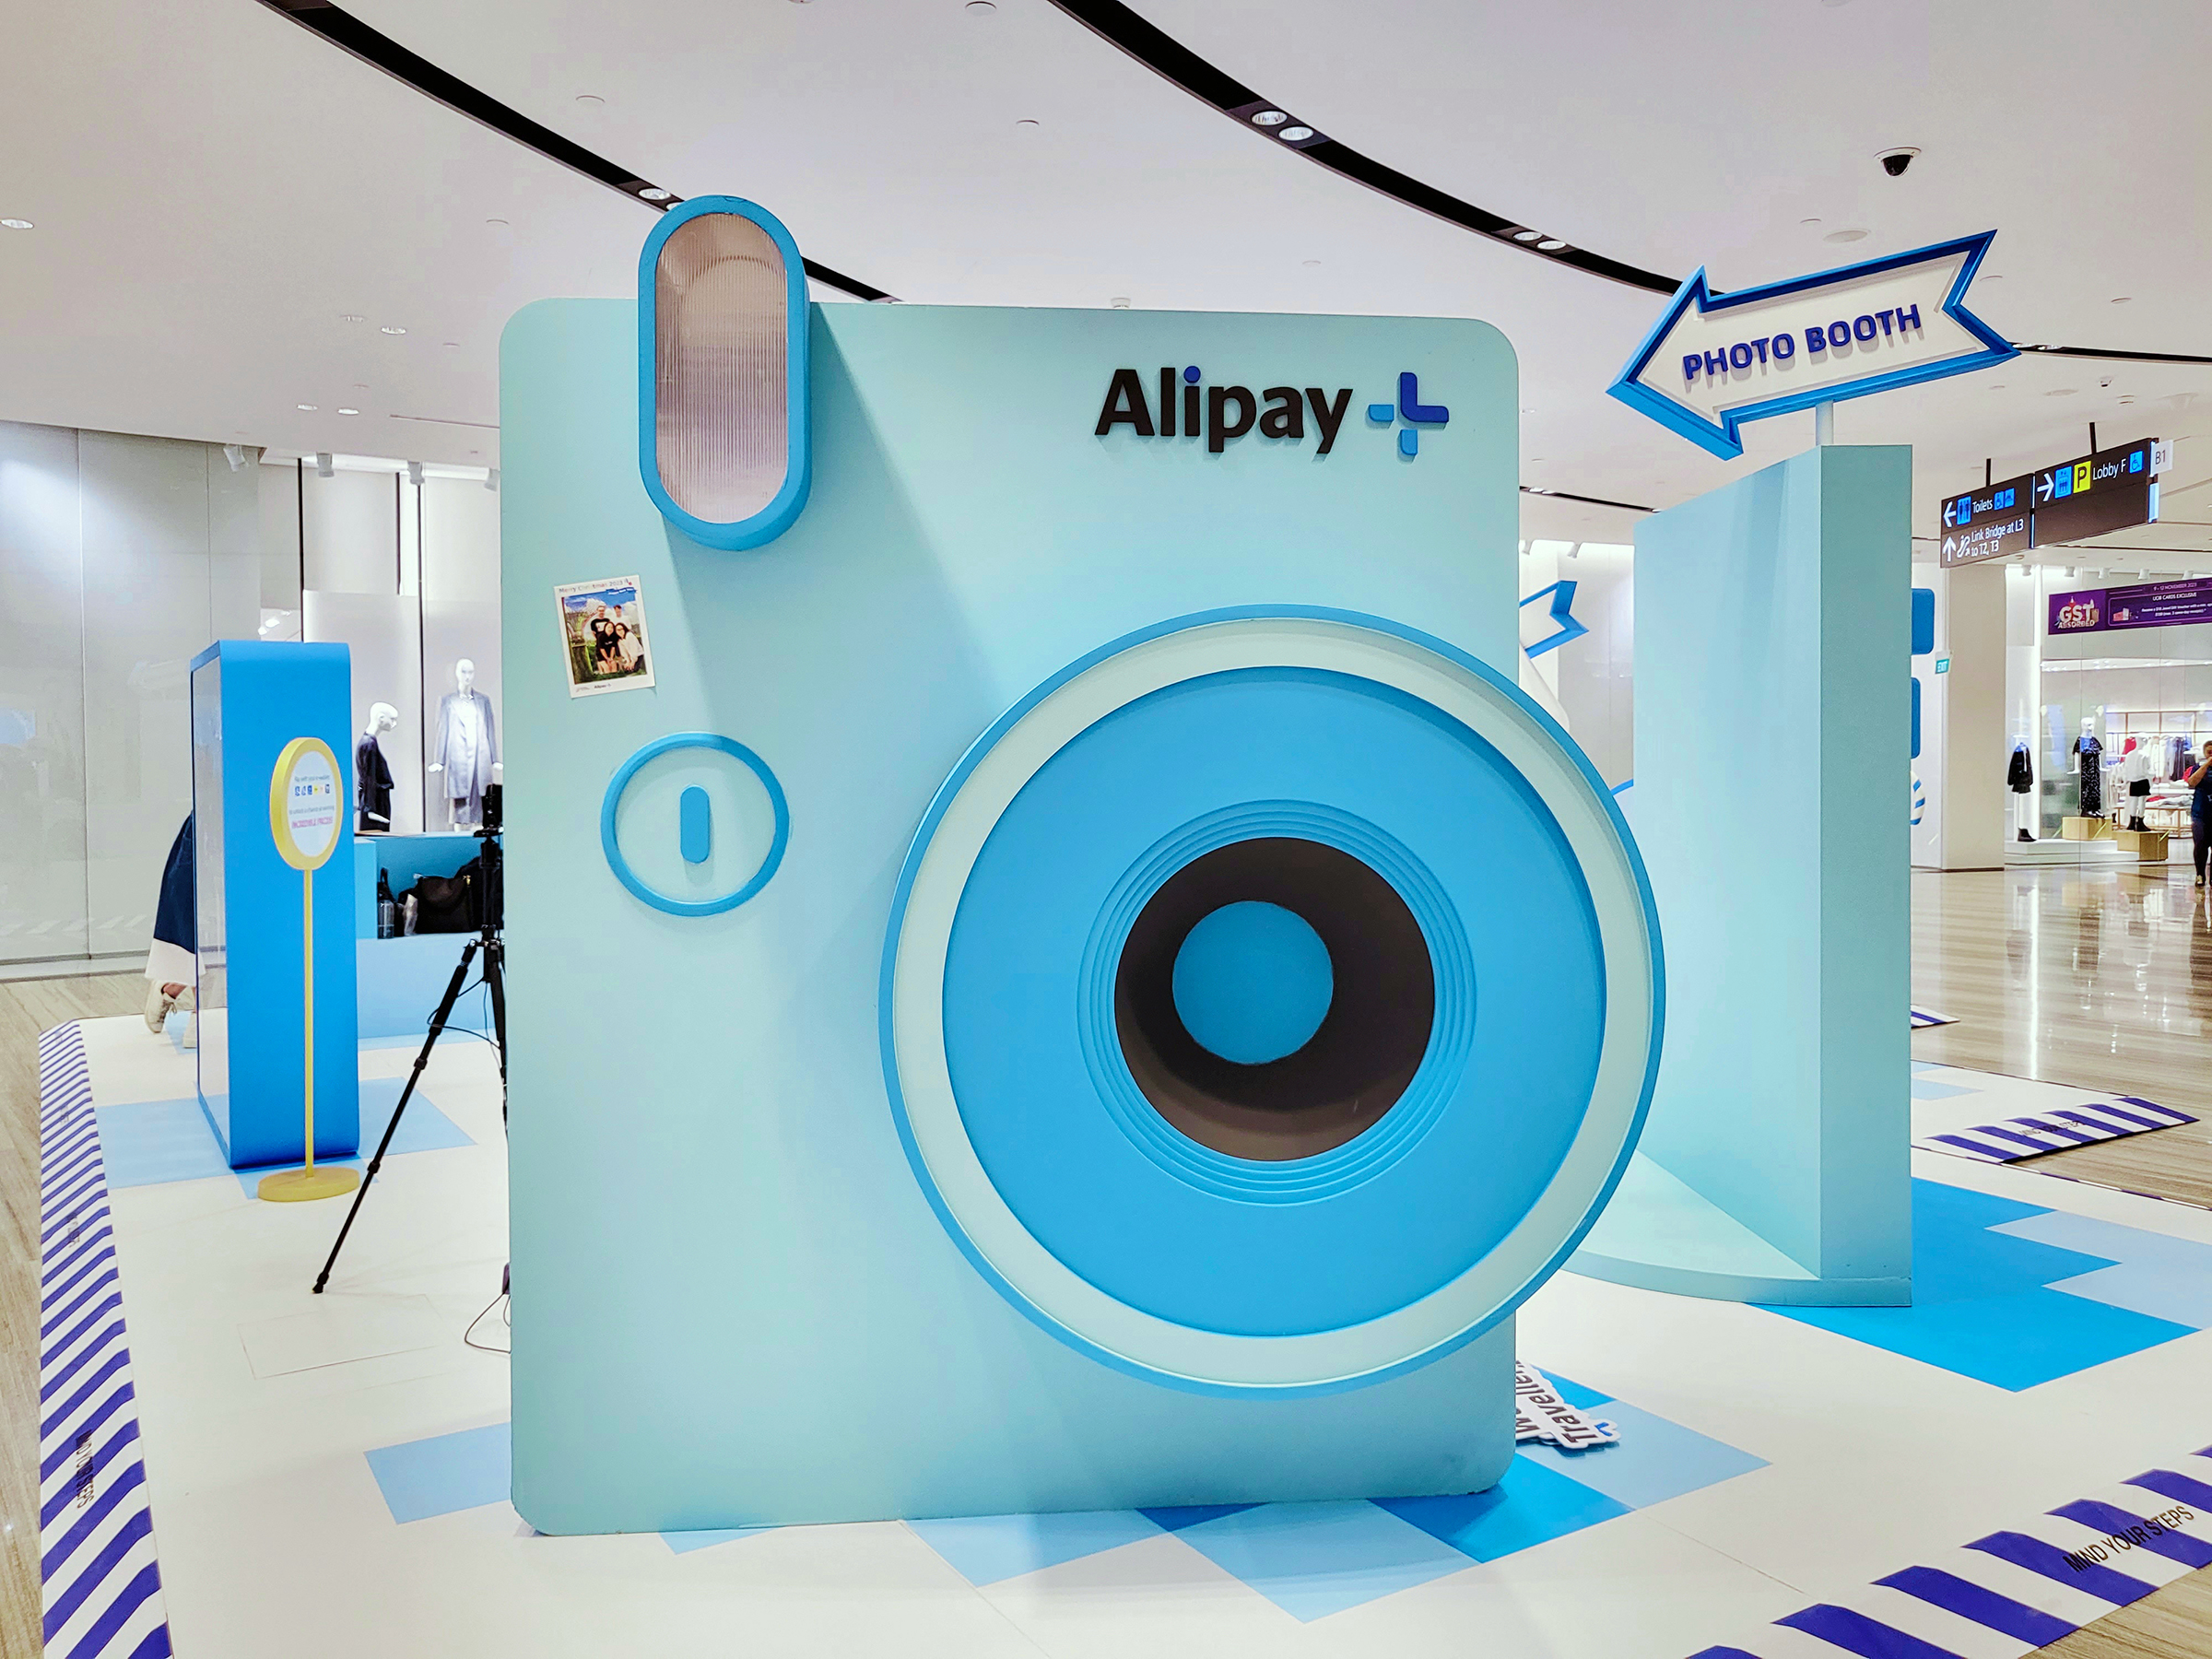 London Design Awards - Alipay+ Xmas Pop-up Store At Singapore Changi Airport